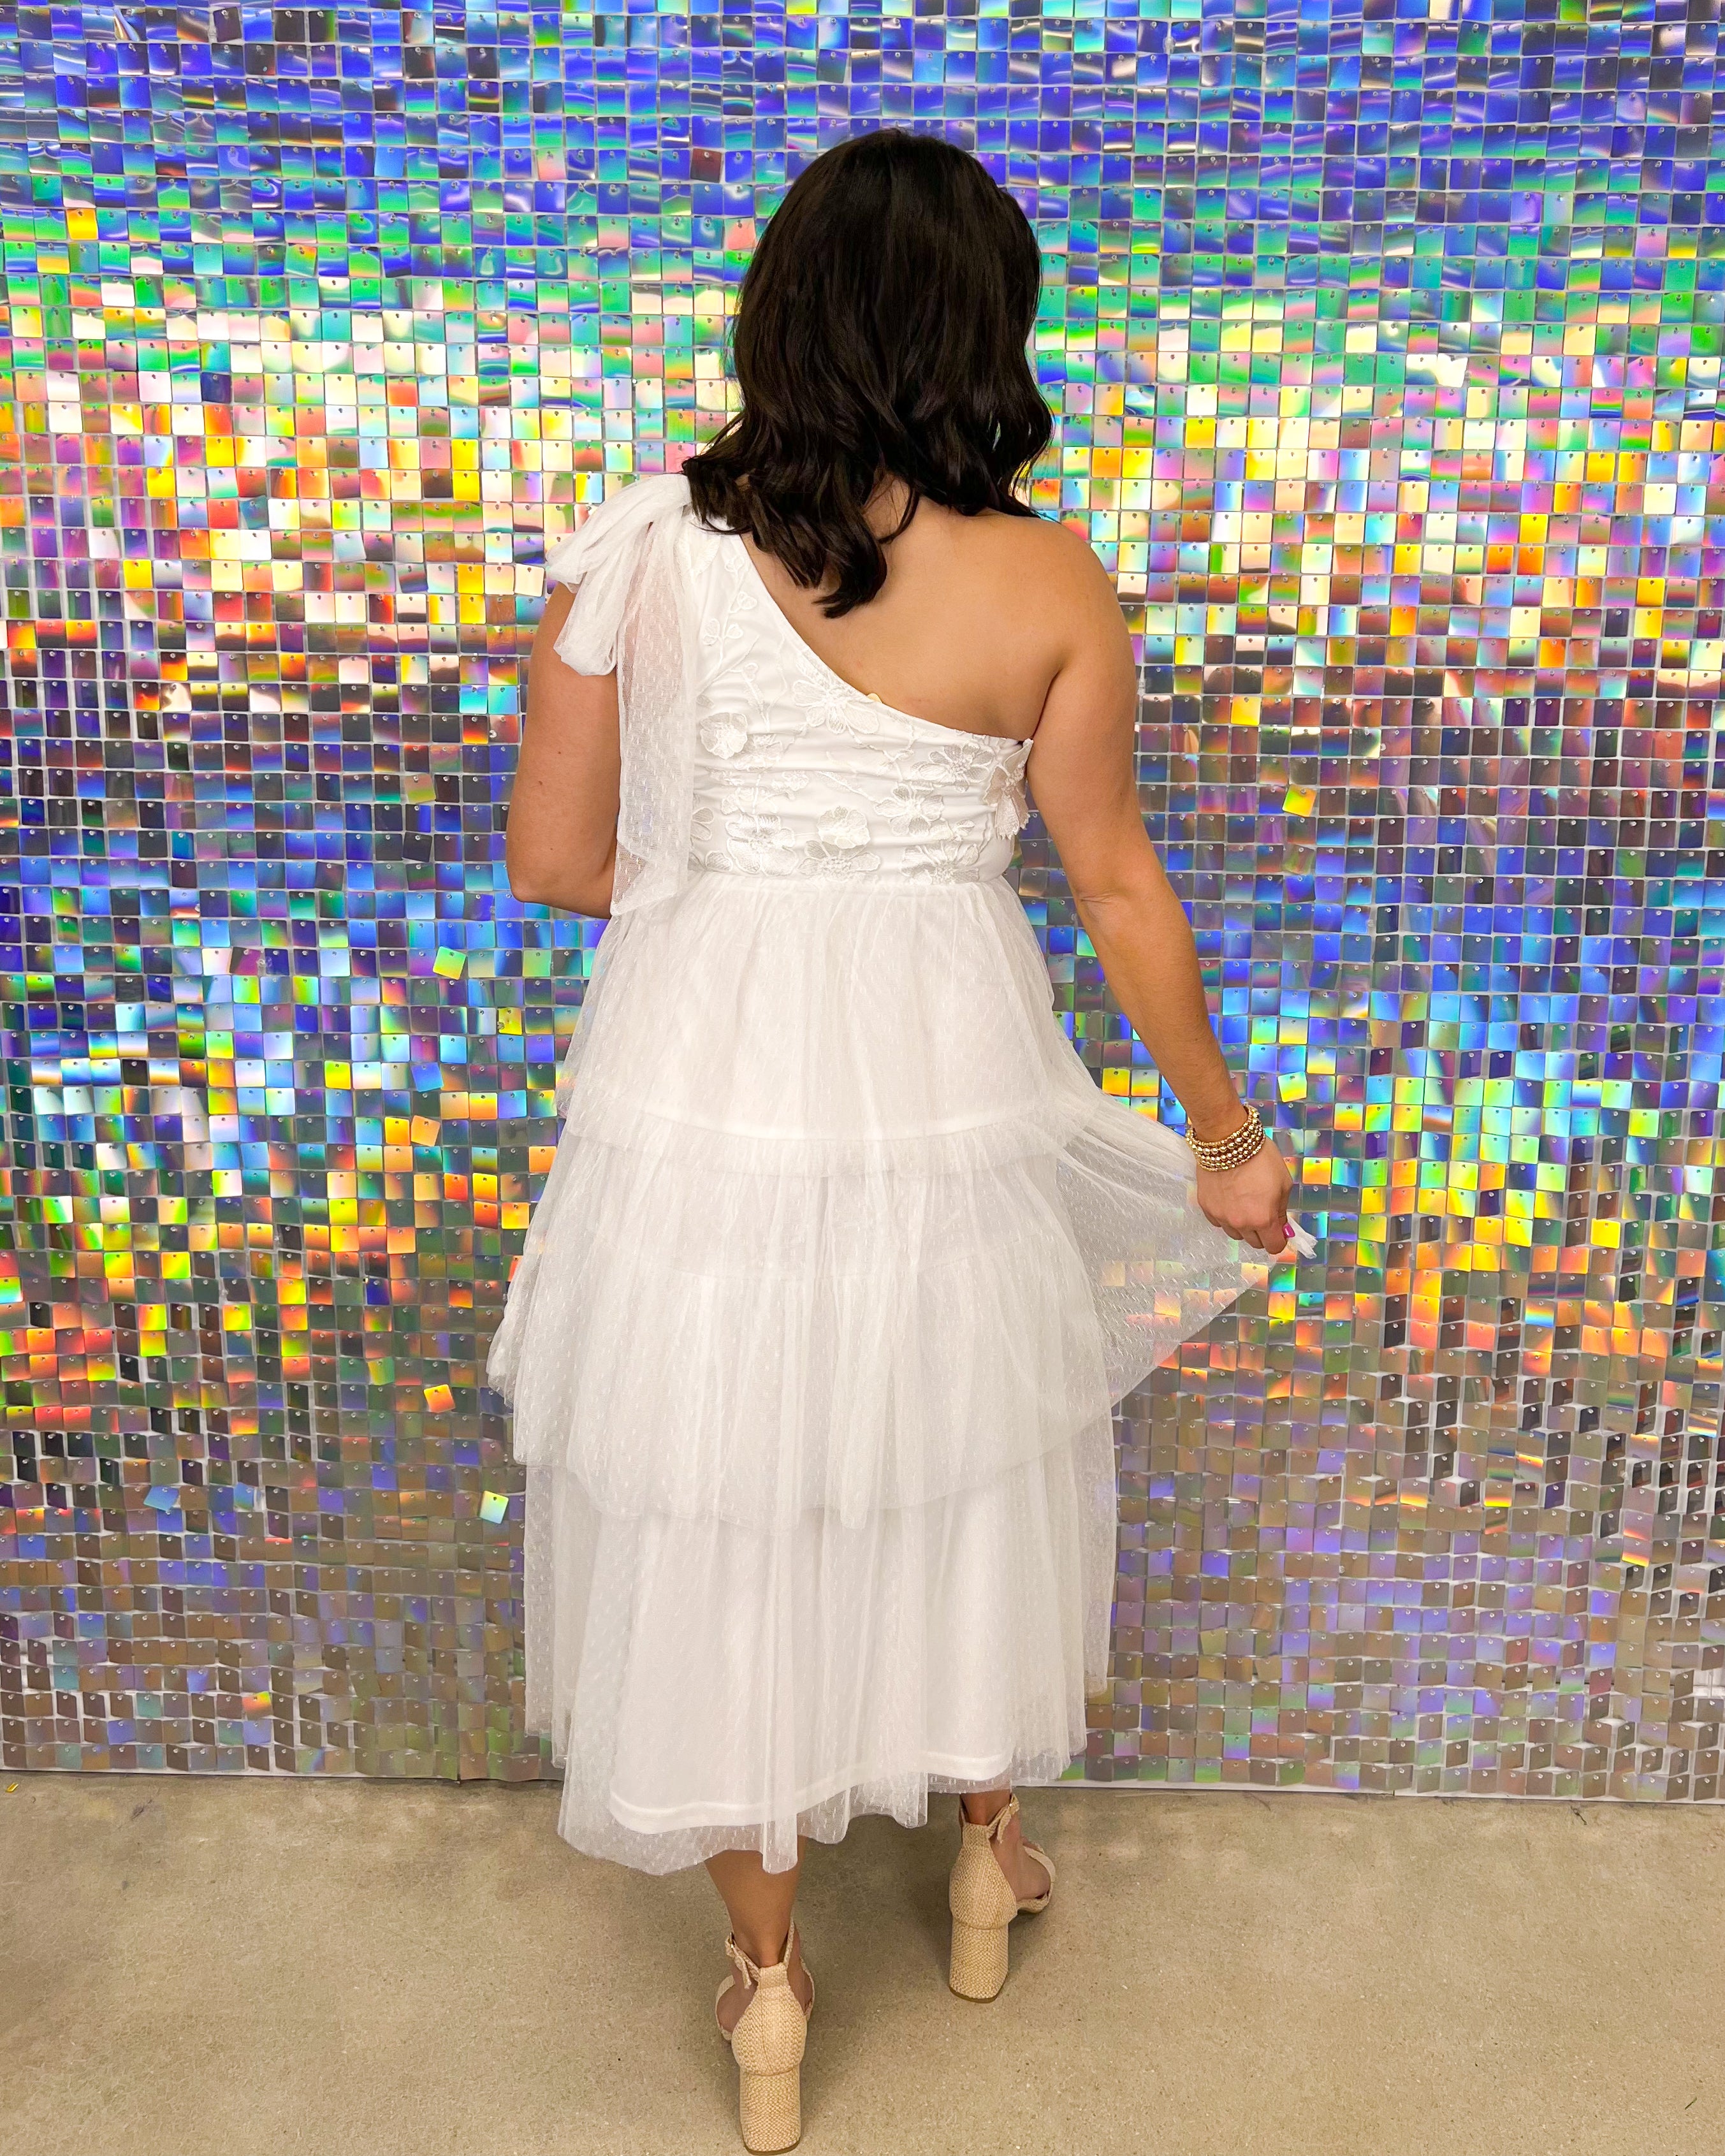 Entro Natalie Dress - White, one shoulder, applique, flowers, tiered, tulle skirt, midi, wedding, bride, graduation